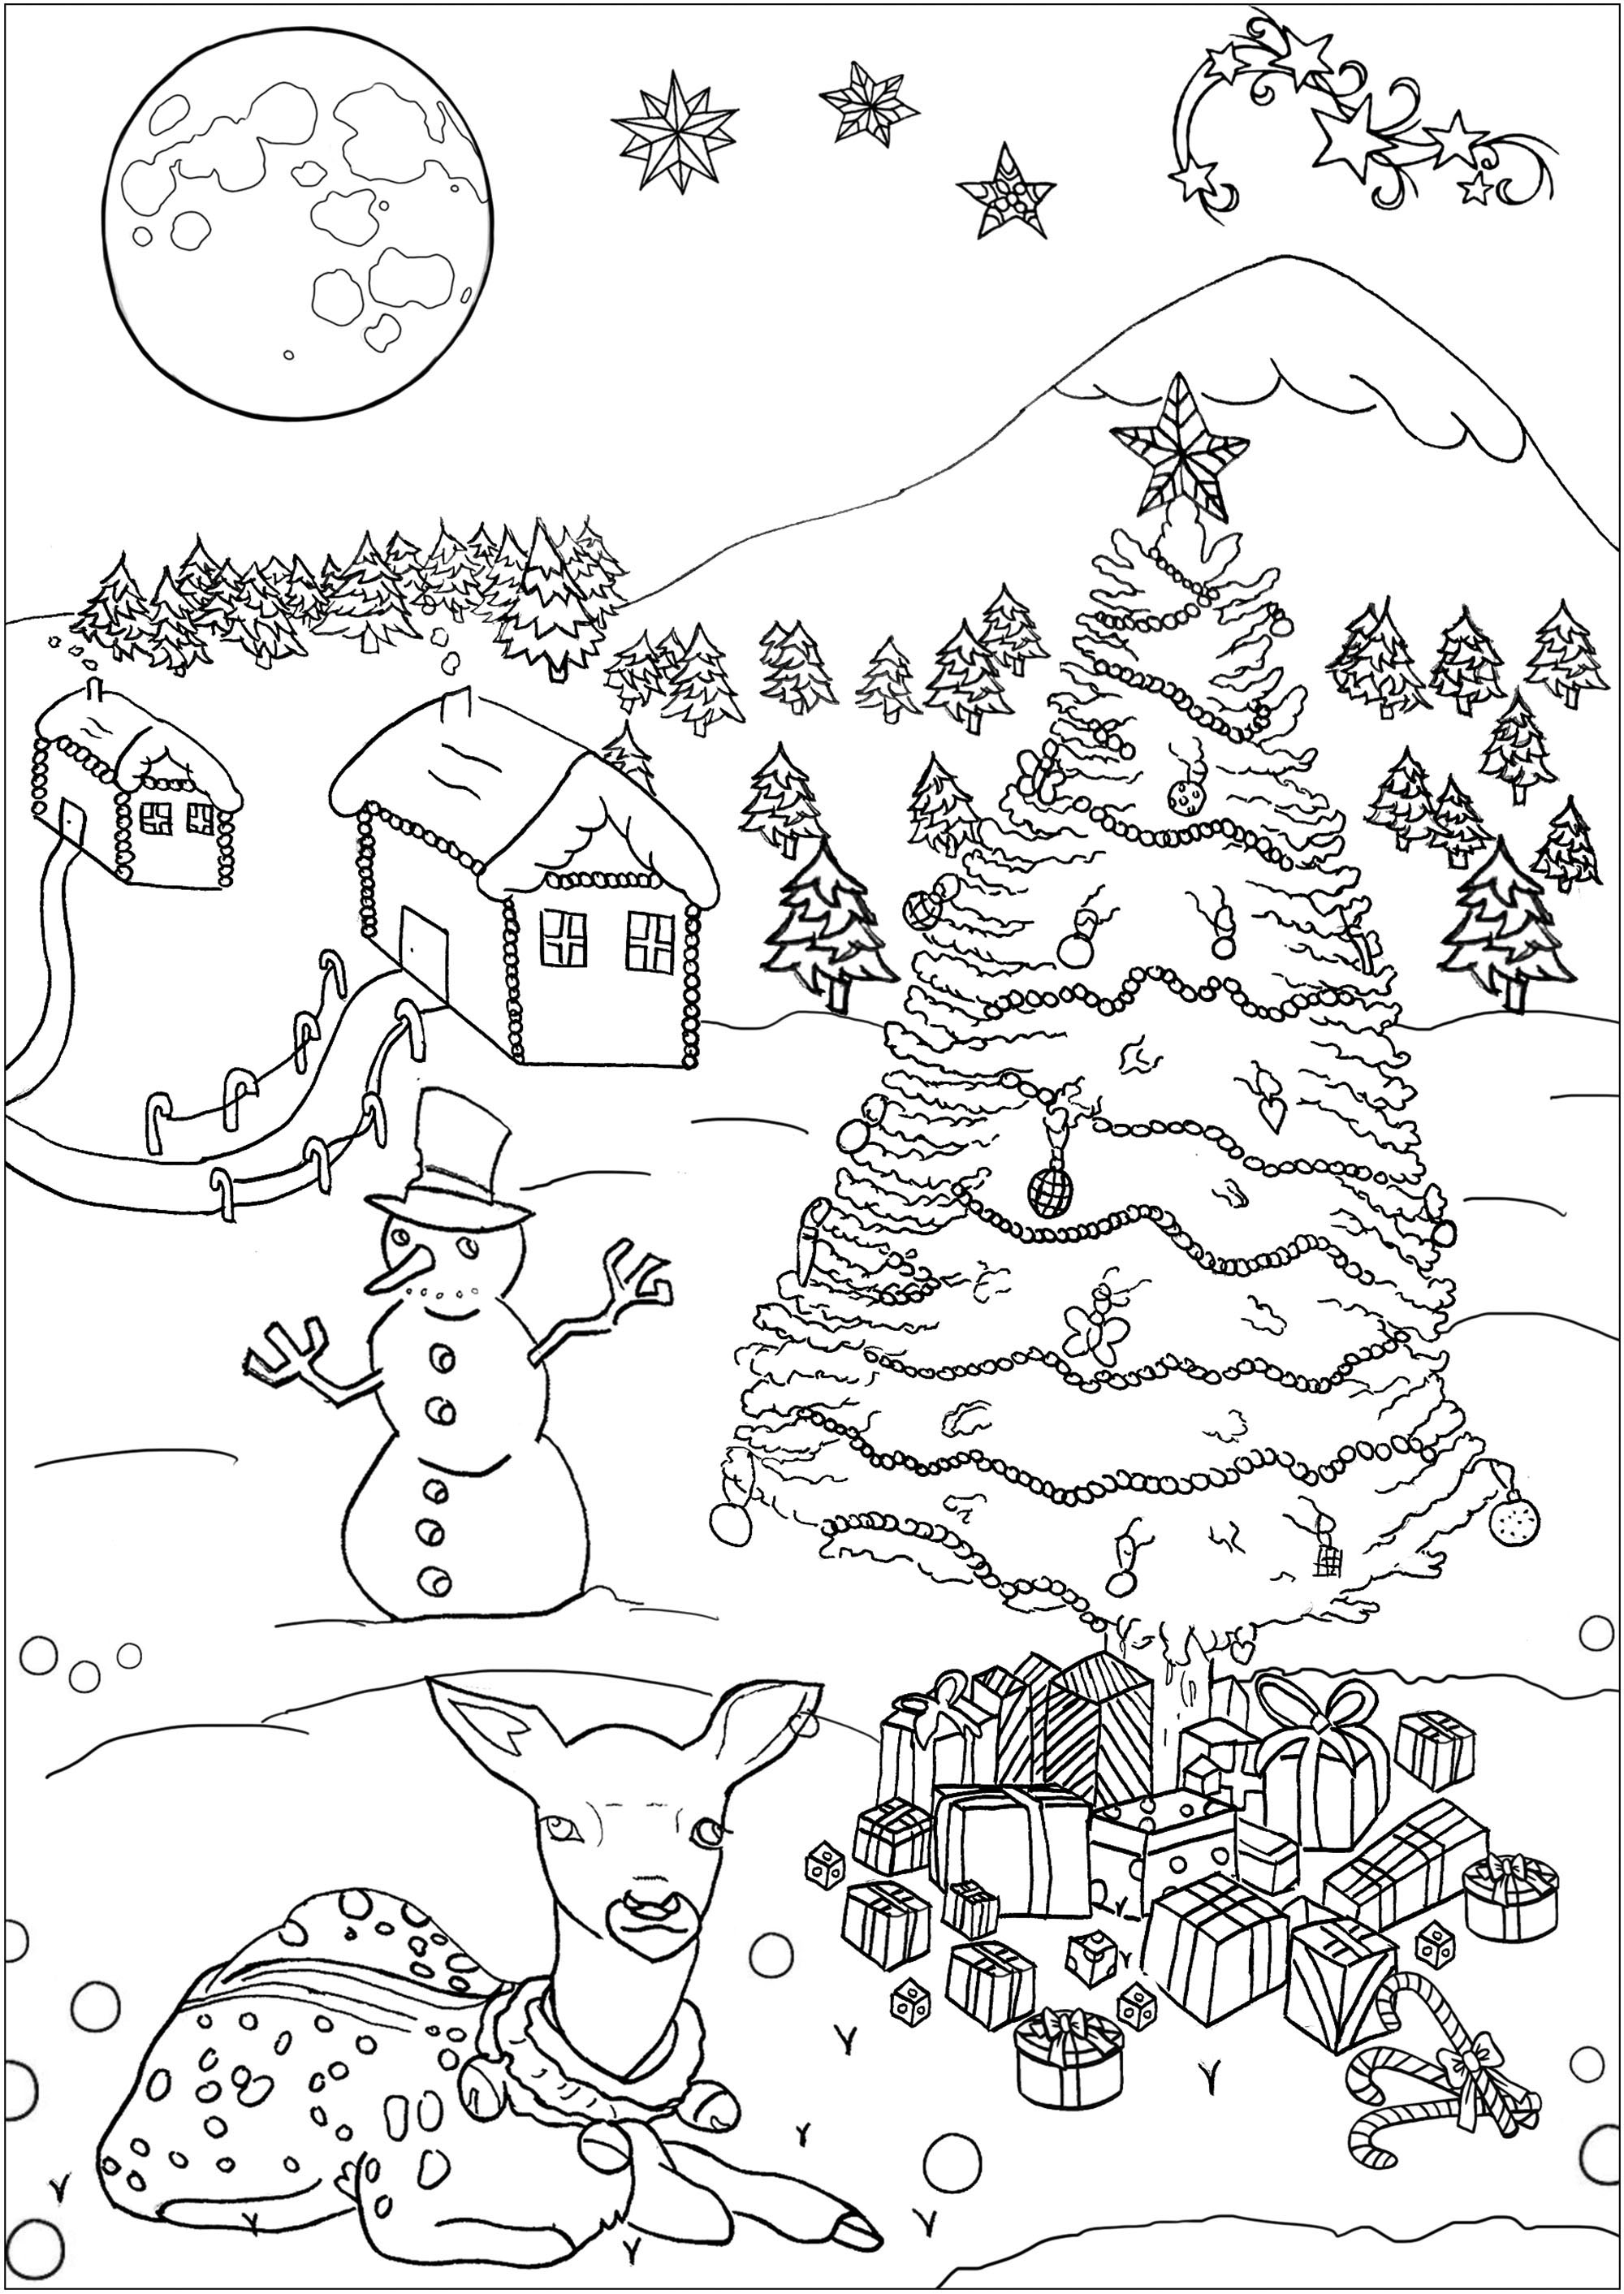 A nice snowman, a deer, a tree ... everything to spend a good Christmas, Artist : Gamma